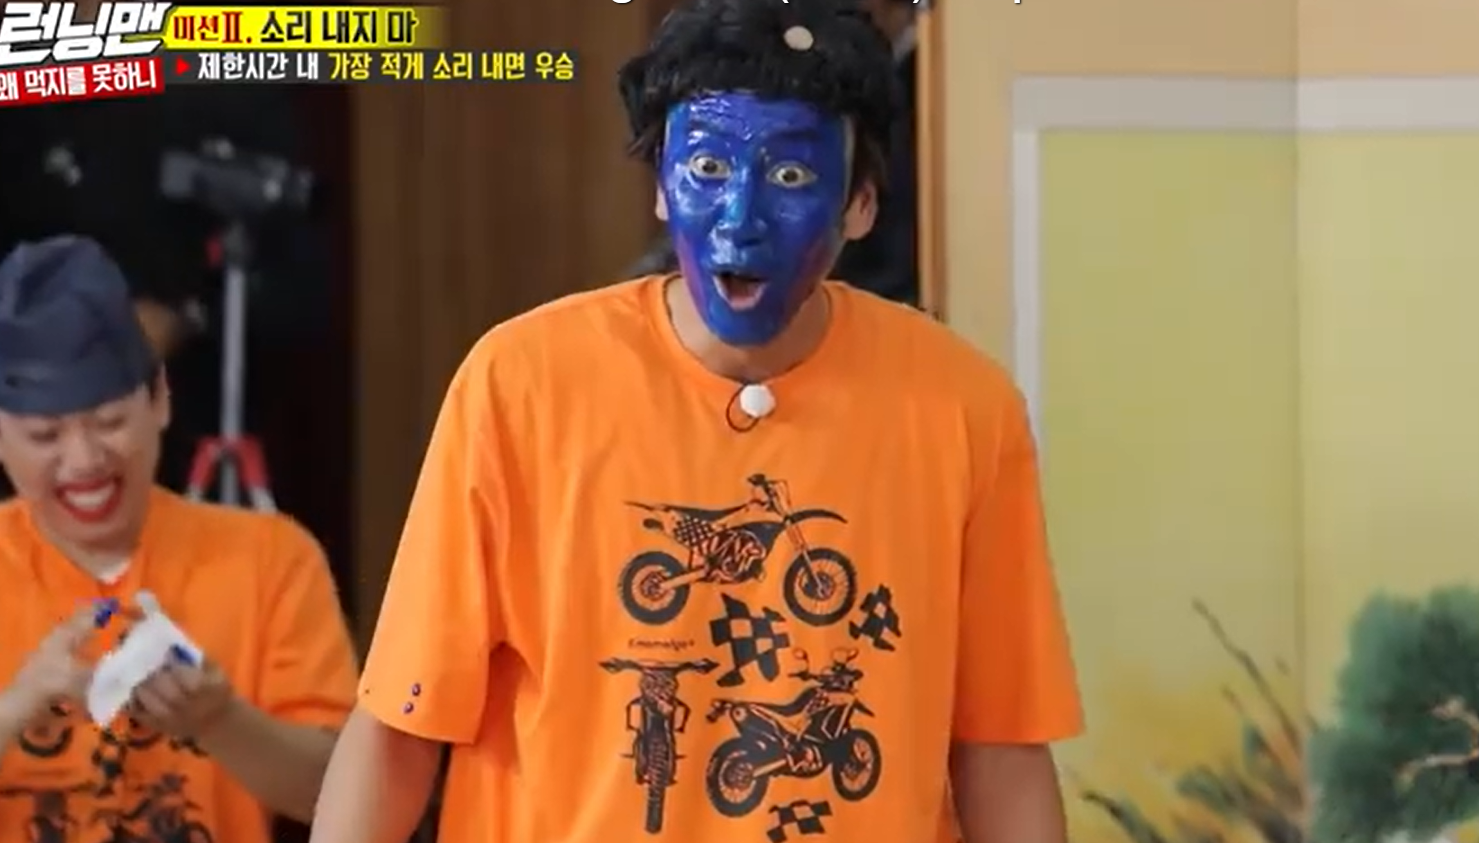 best lee kwang-soo Running Man moments - kwang-soo blue monster